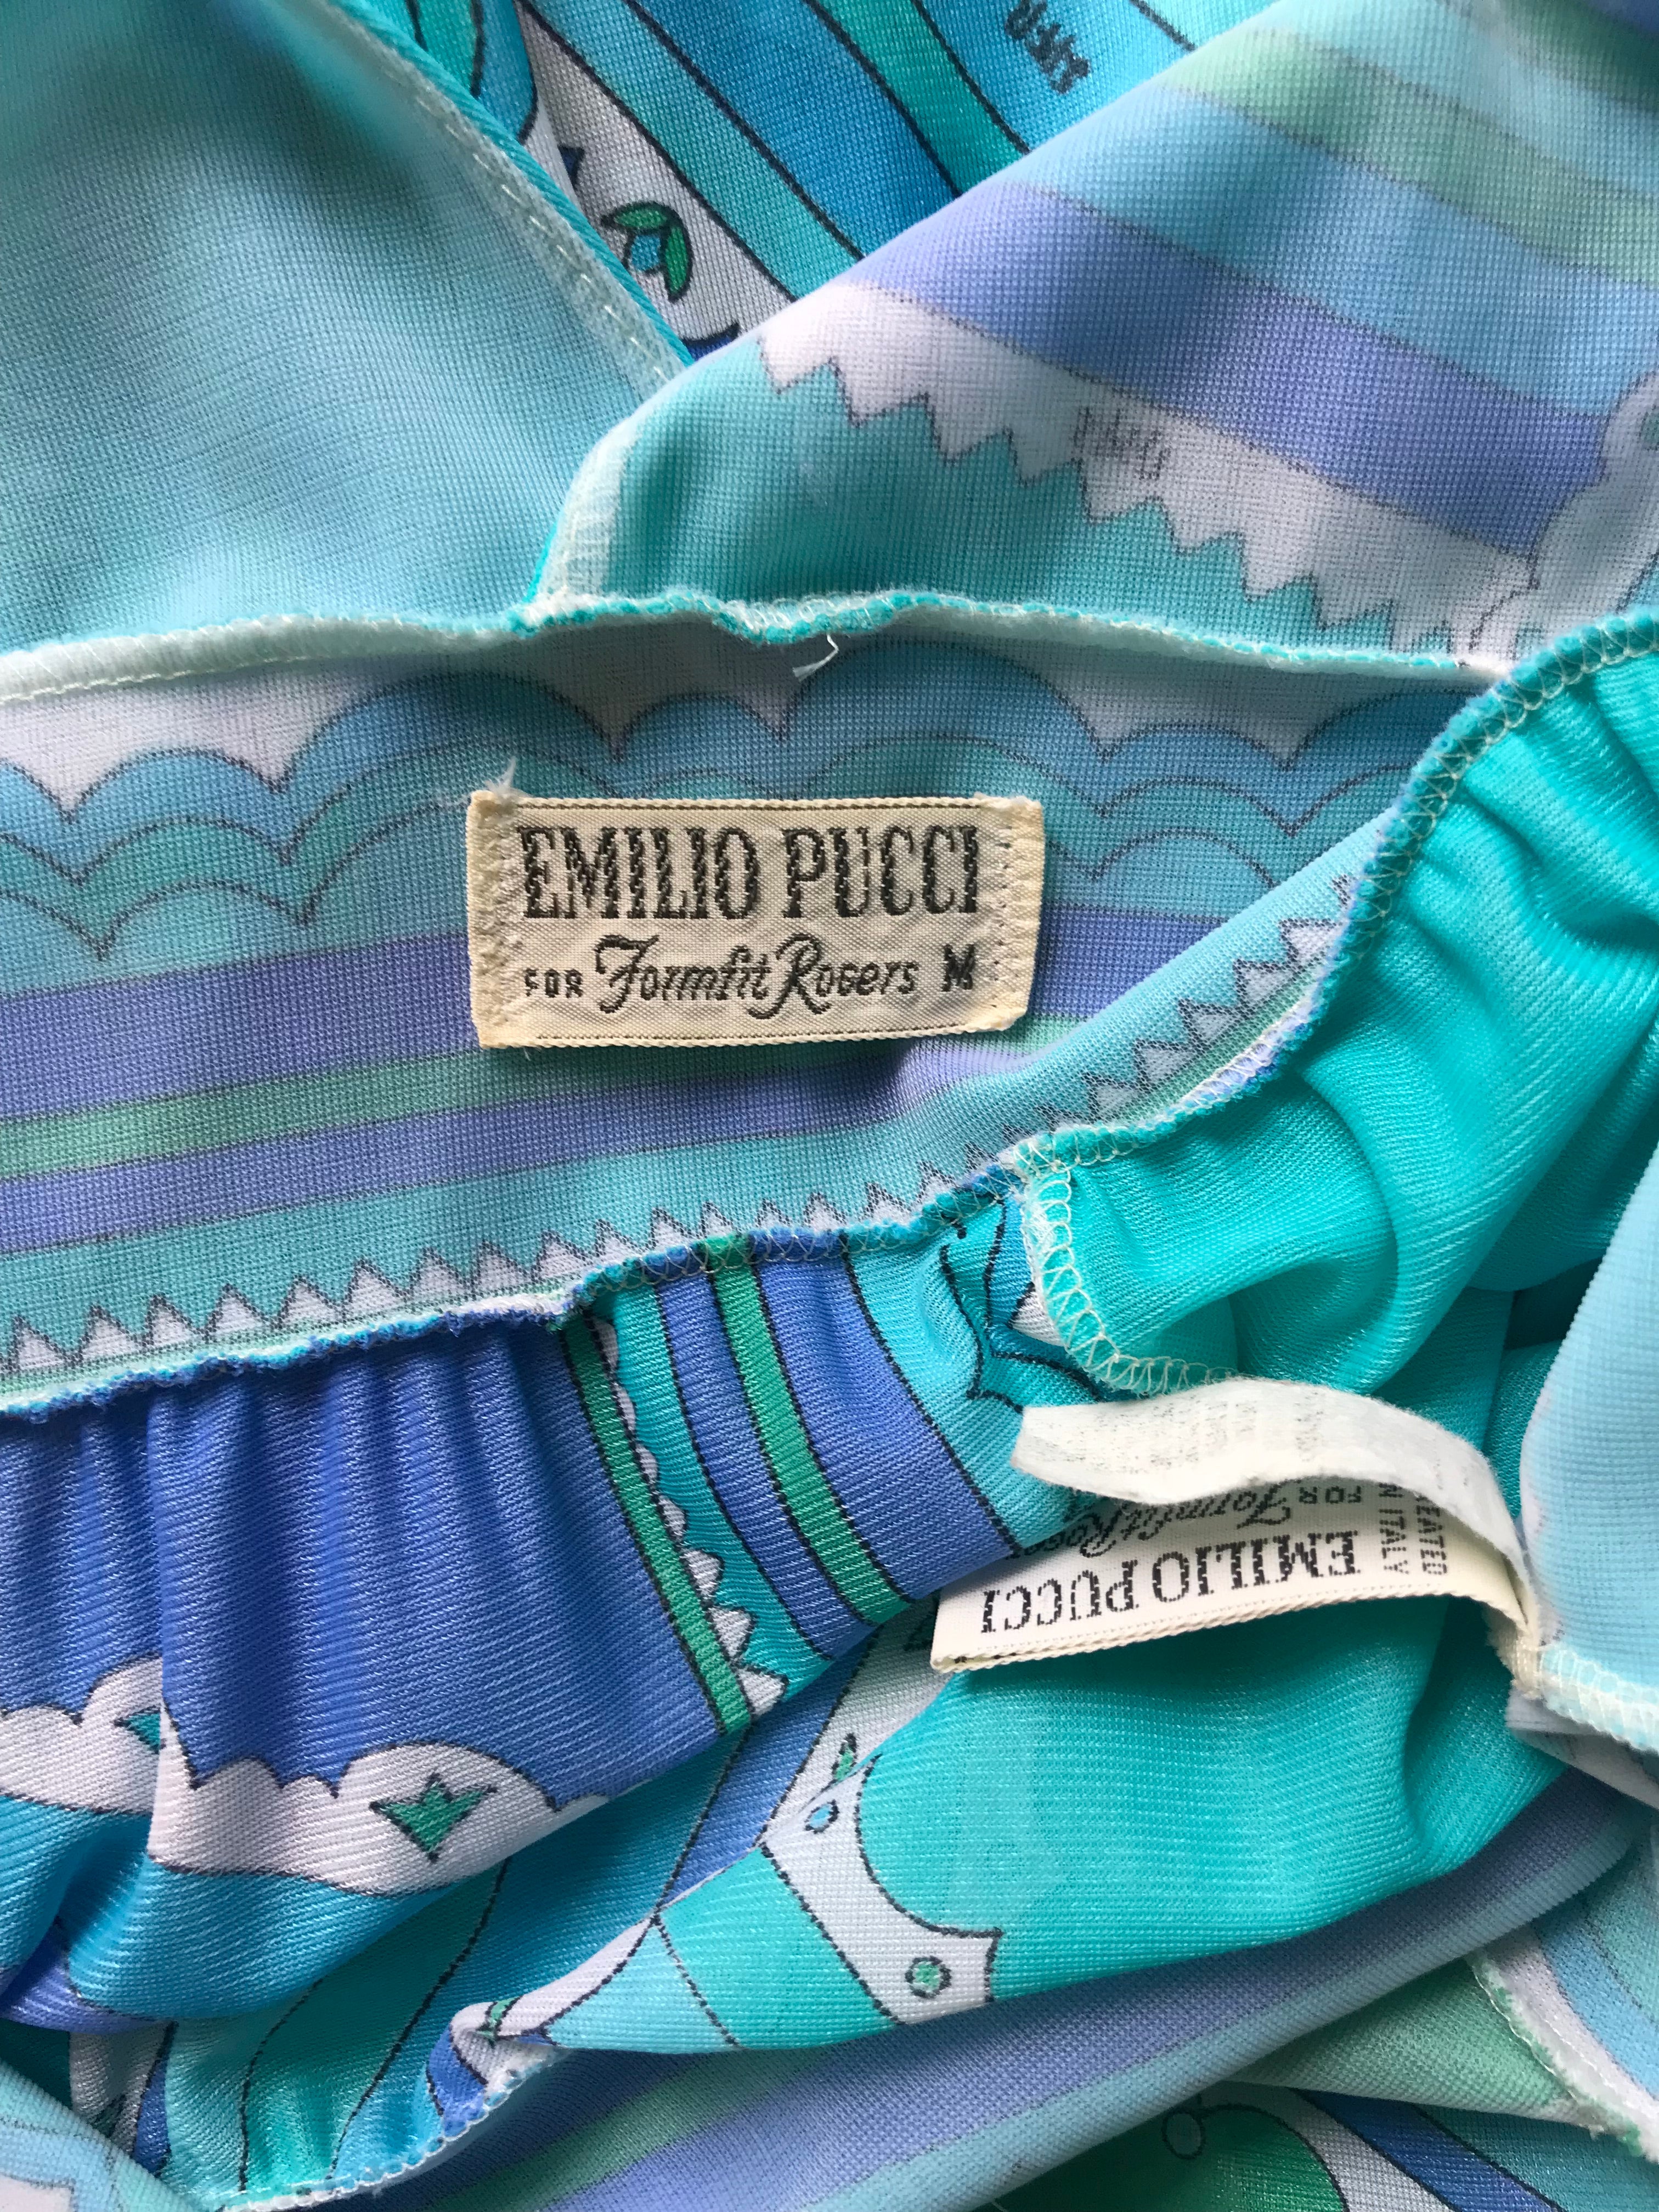 Emilio Pucci 1960s Formfit Rogers Blue Slip Dress – Featherstone 